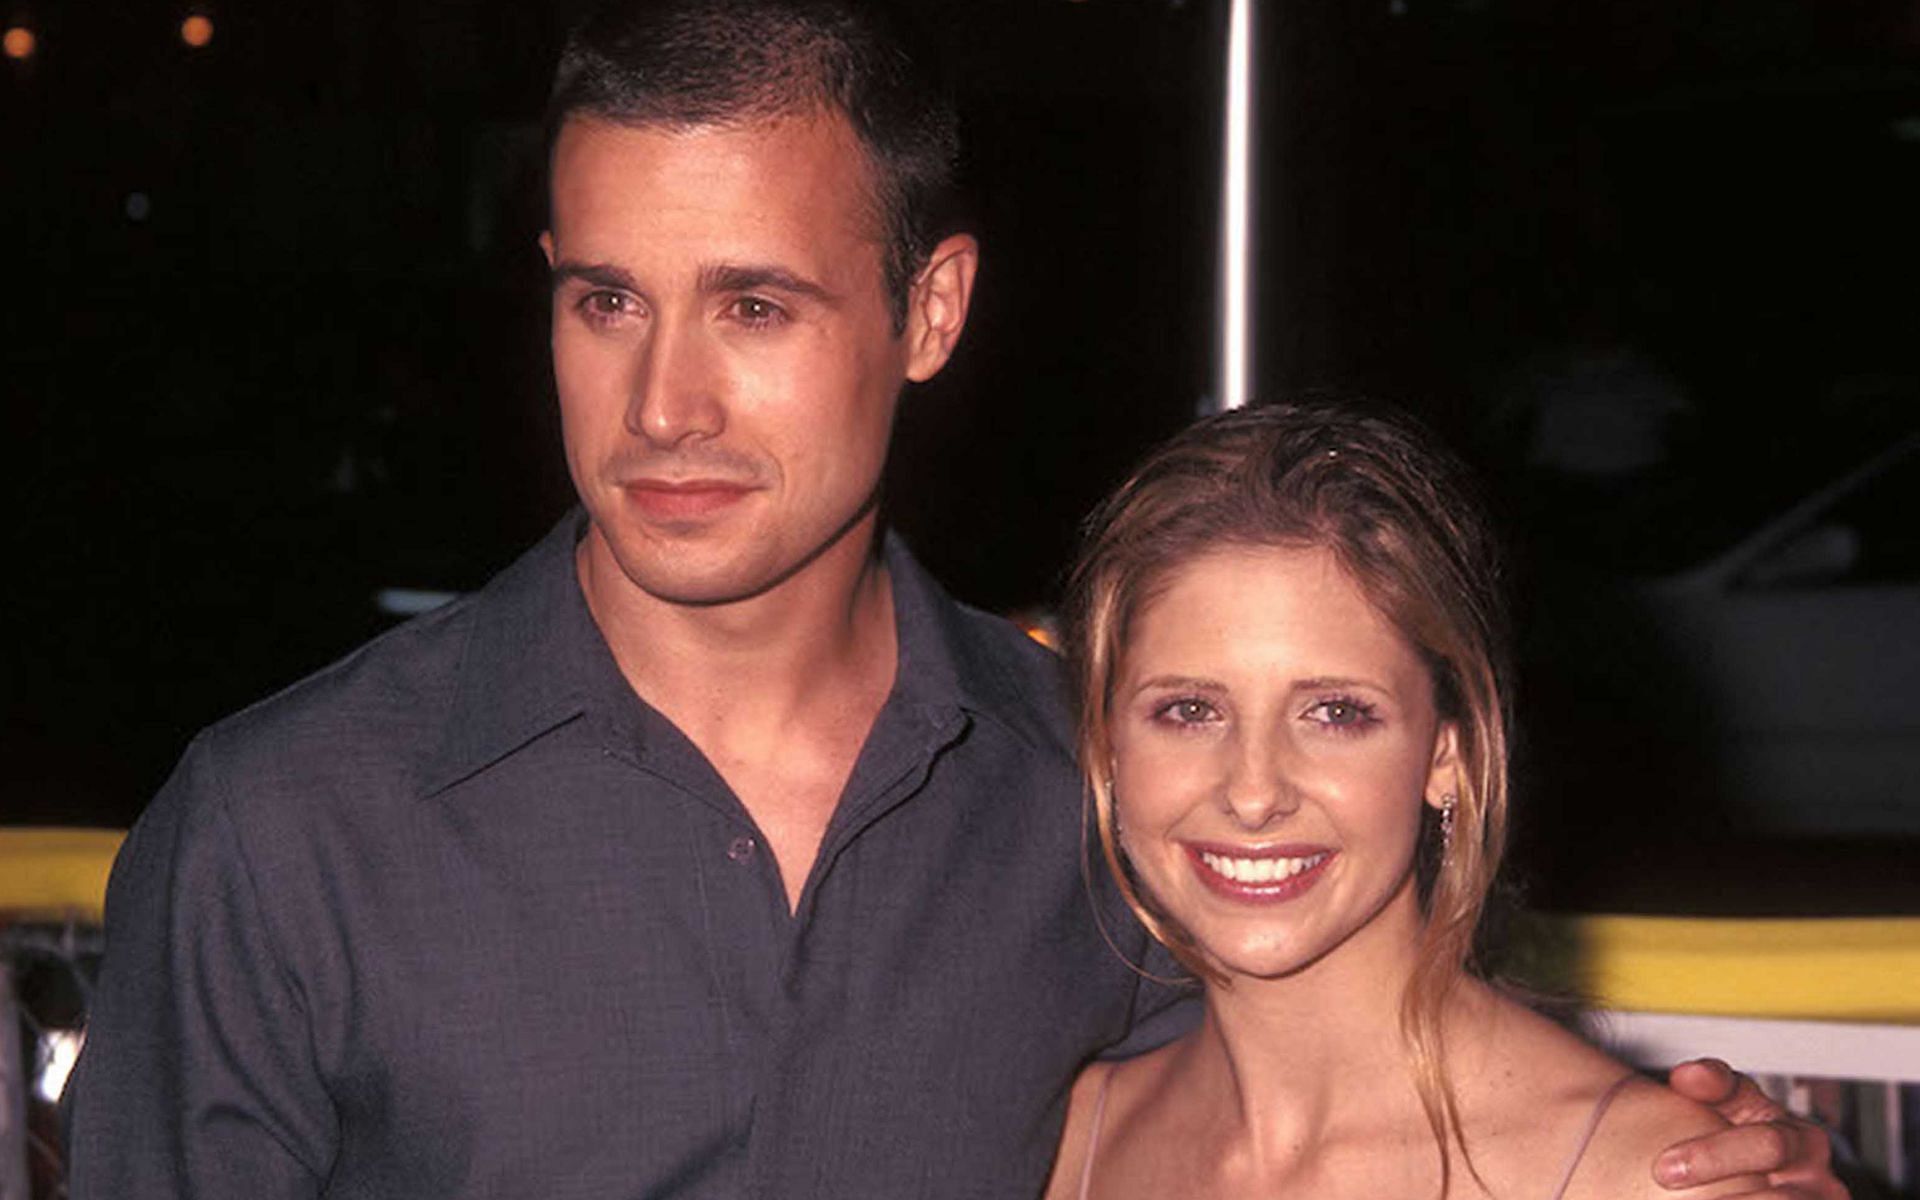 Sarah Michelle Gellar and Freddie Prinze Jr. tied the knot in 2002 (Image via Getty Images/Ron Galella, Ltd.)